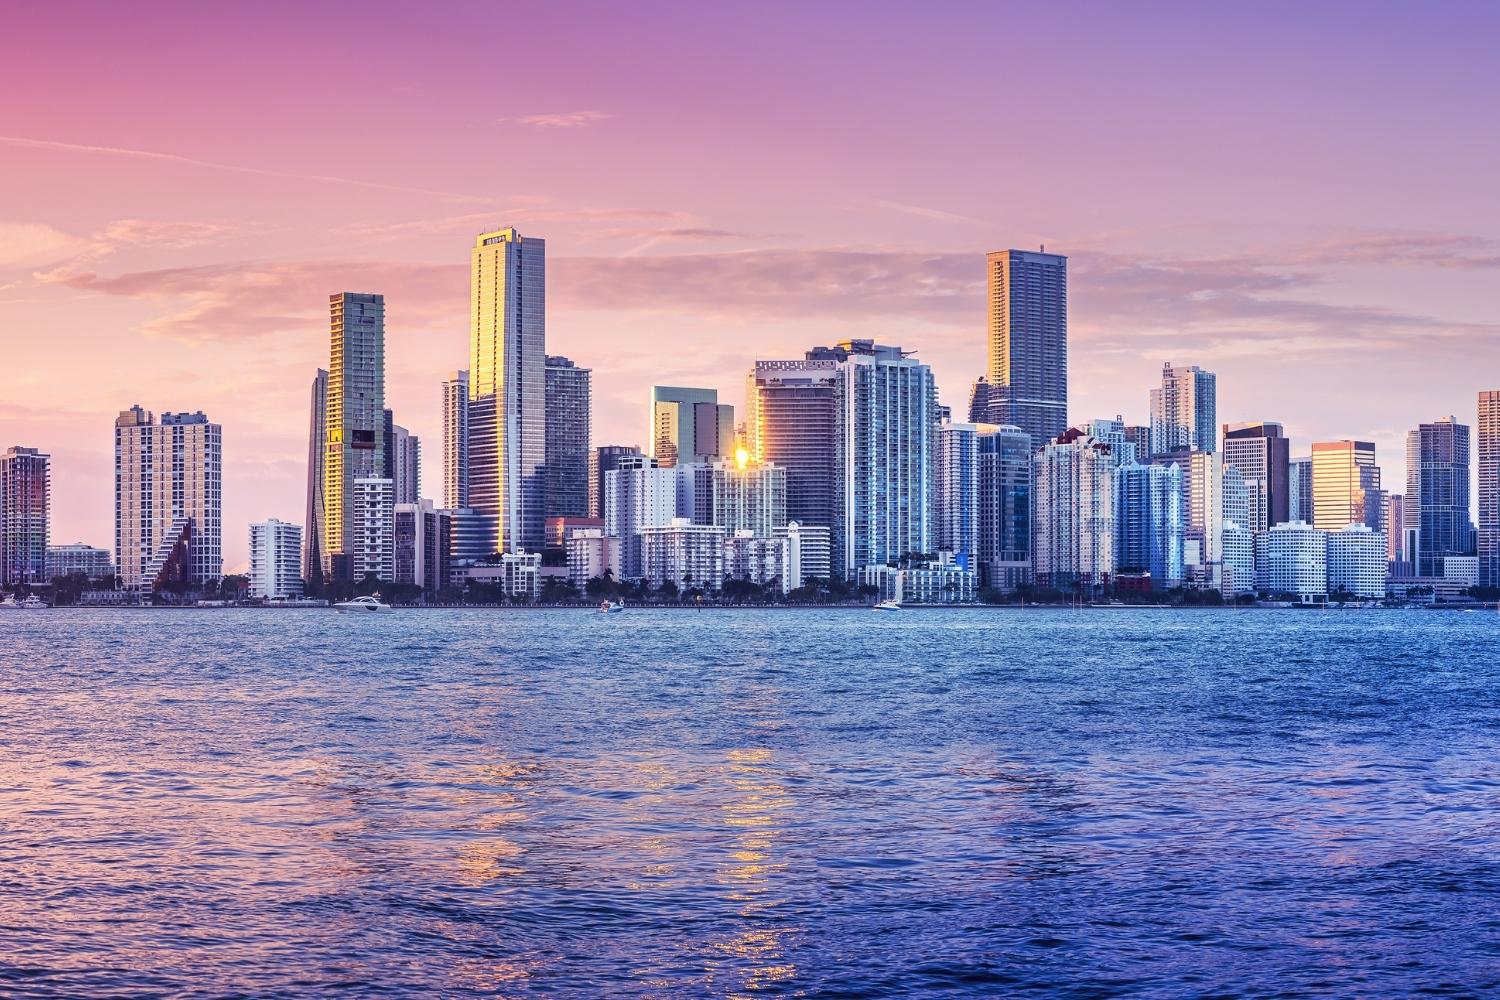 The beautiful Downtown Miami Skyline